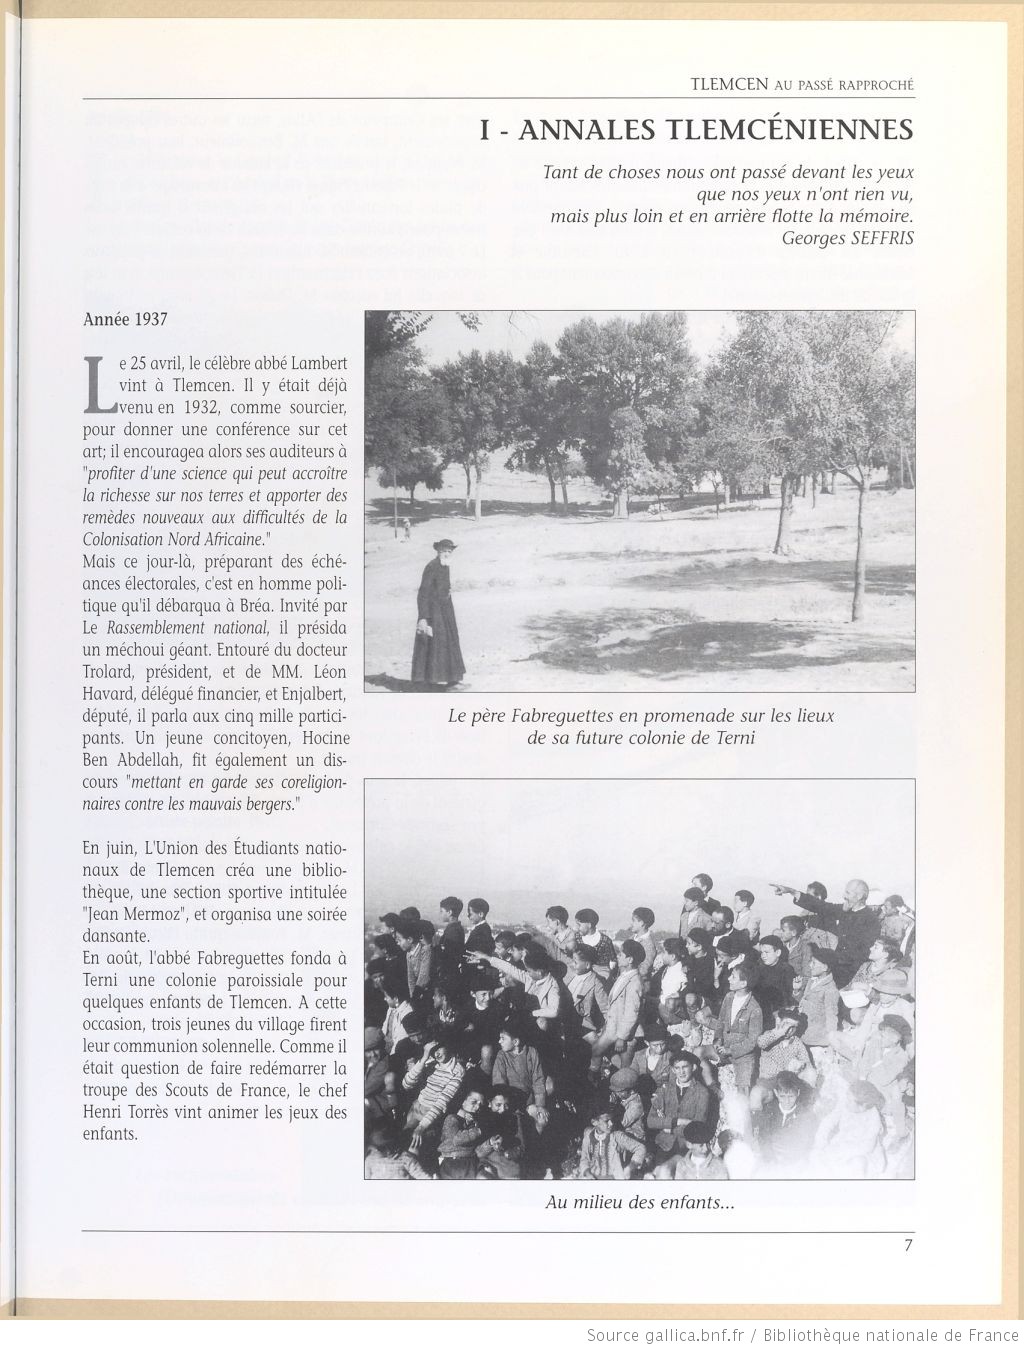 Tlemcen au passe rapproche 1937